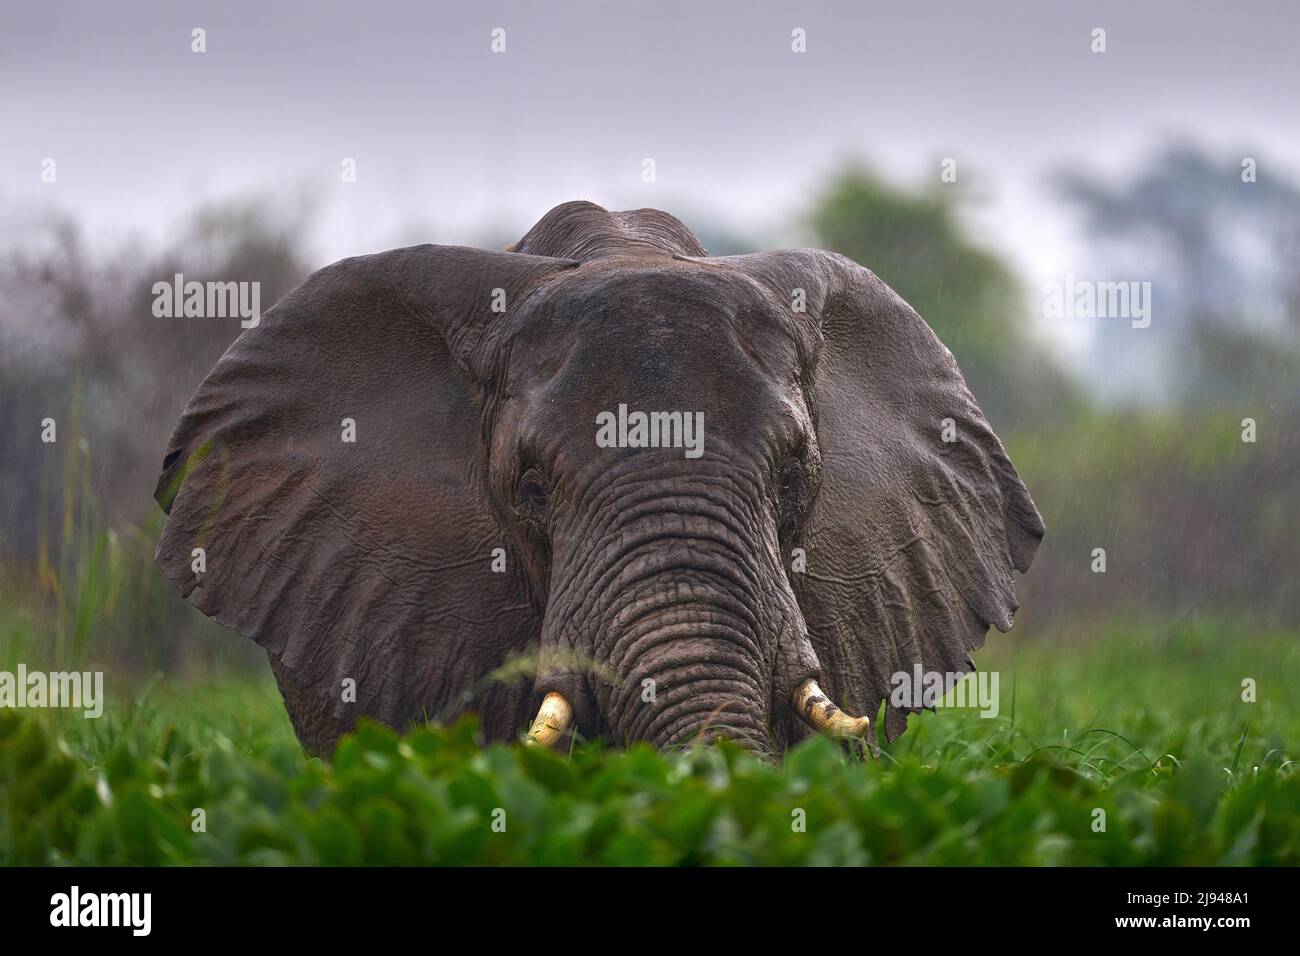 Elephant in rain. Elephant in Murchison Falls NP, Uganda. Big Mammal in the green grass, forest vegetation in the background. Elephant watewr walk in Stock Photo